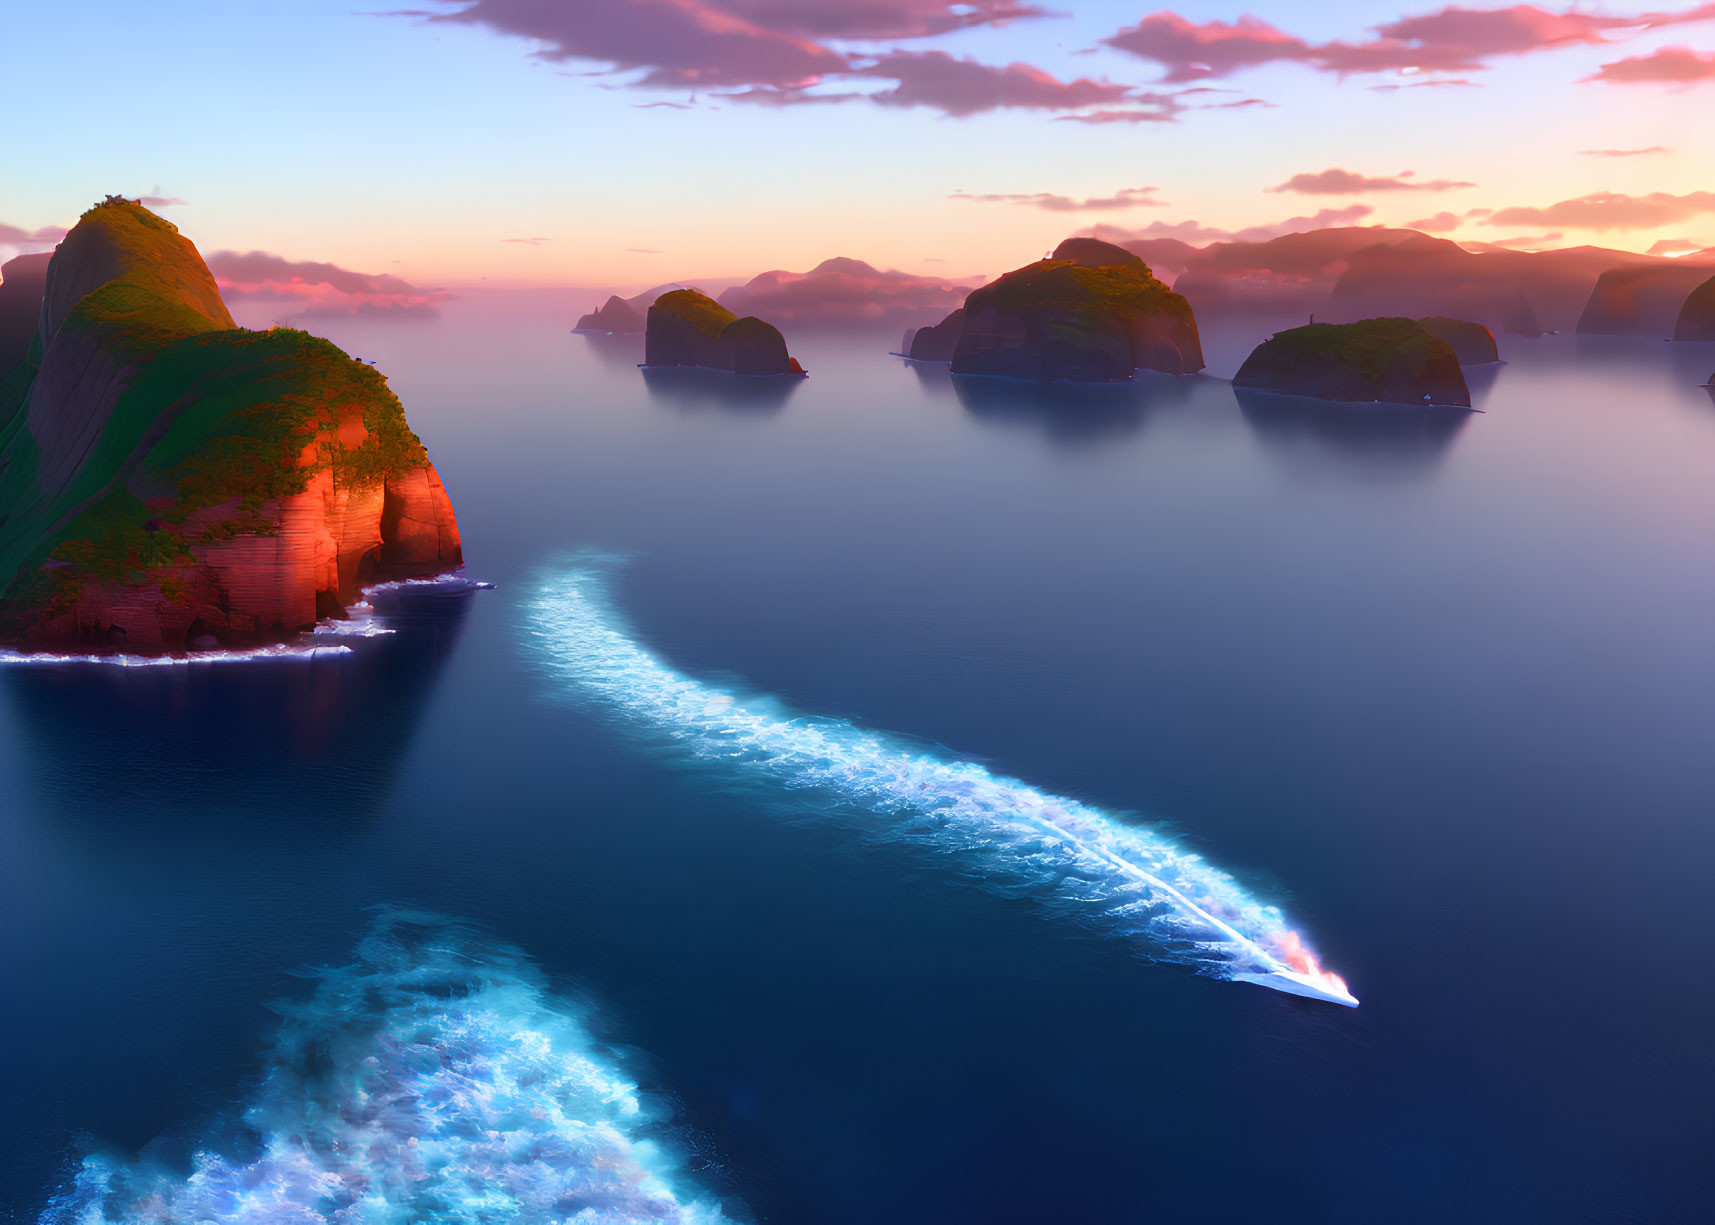 Ocean sunset with speeding boat and cliffs under warm sky